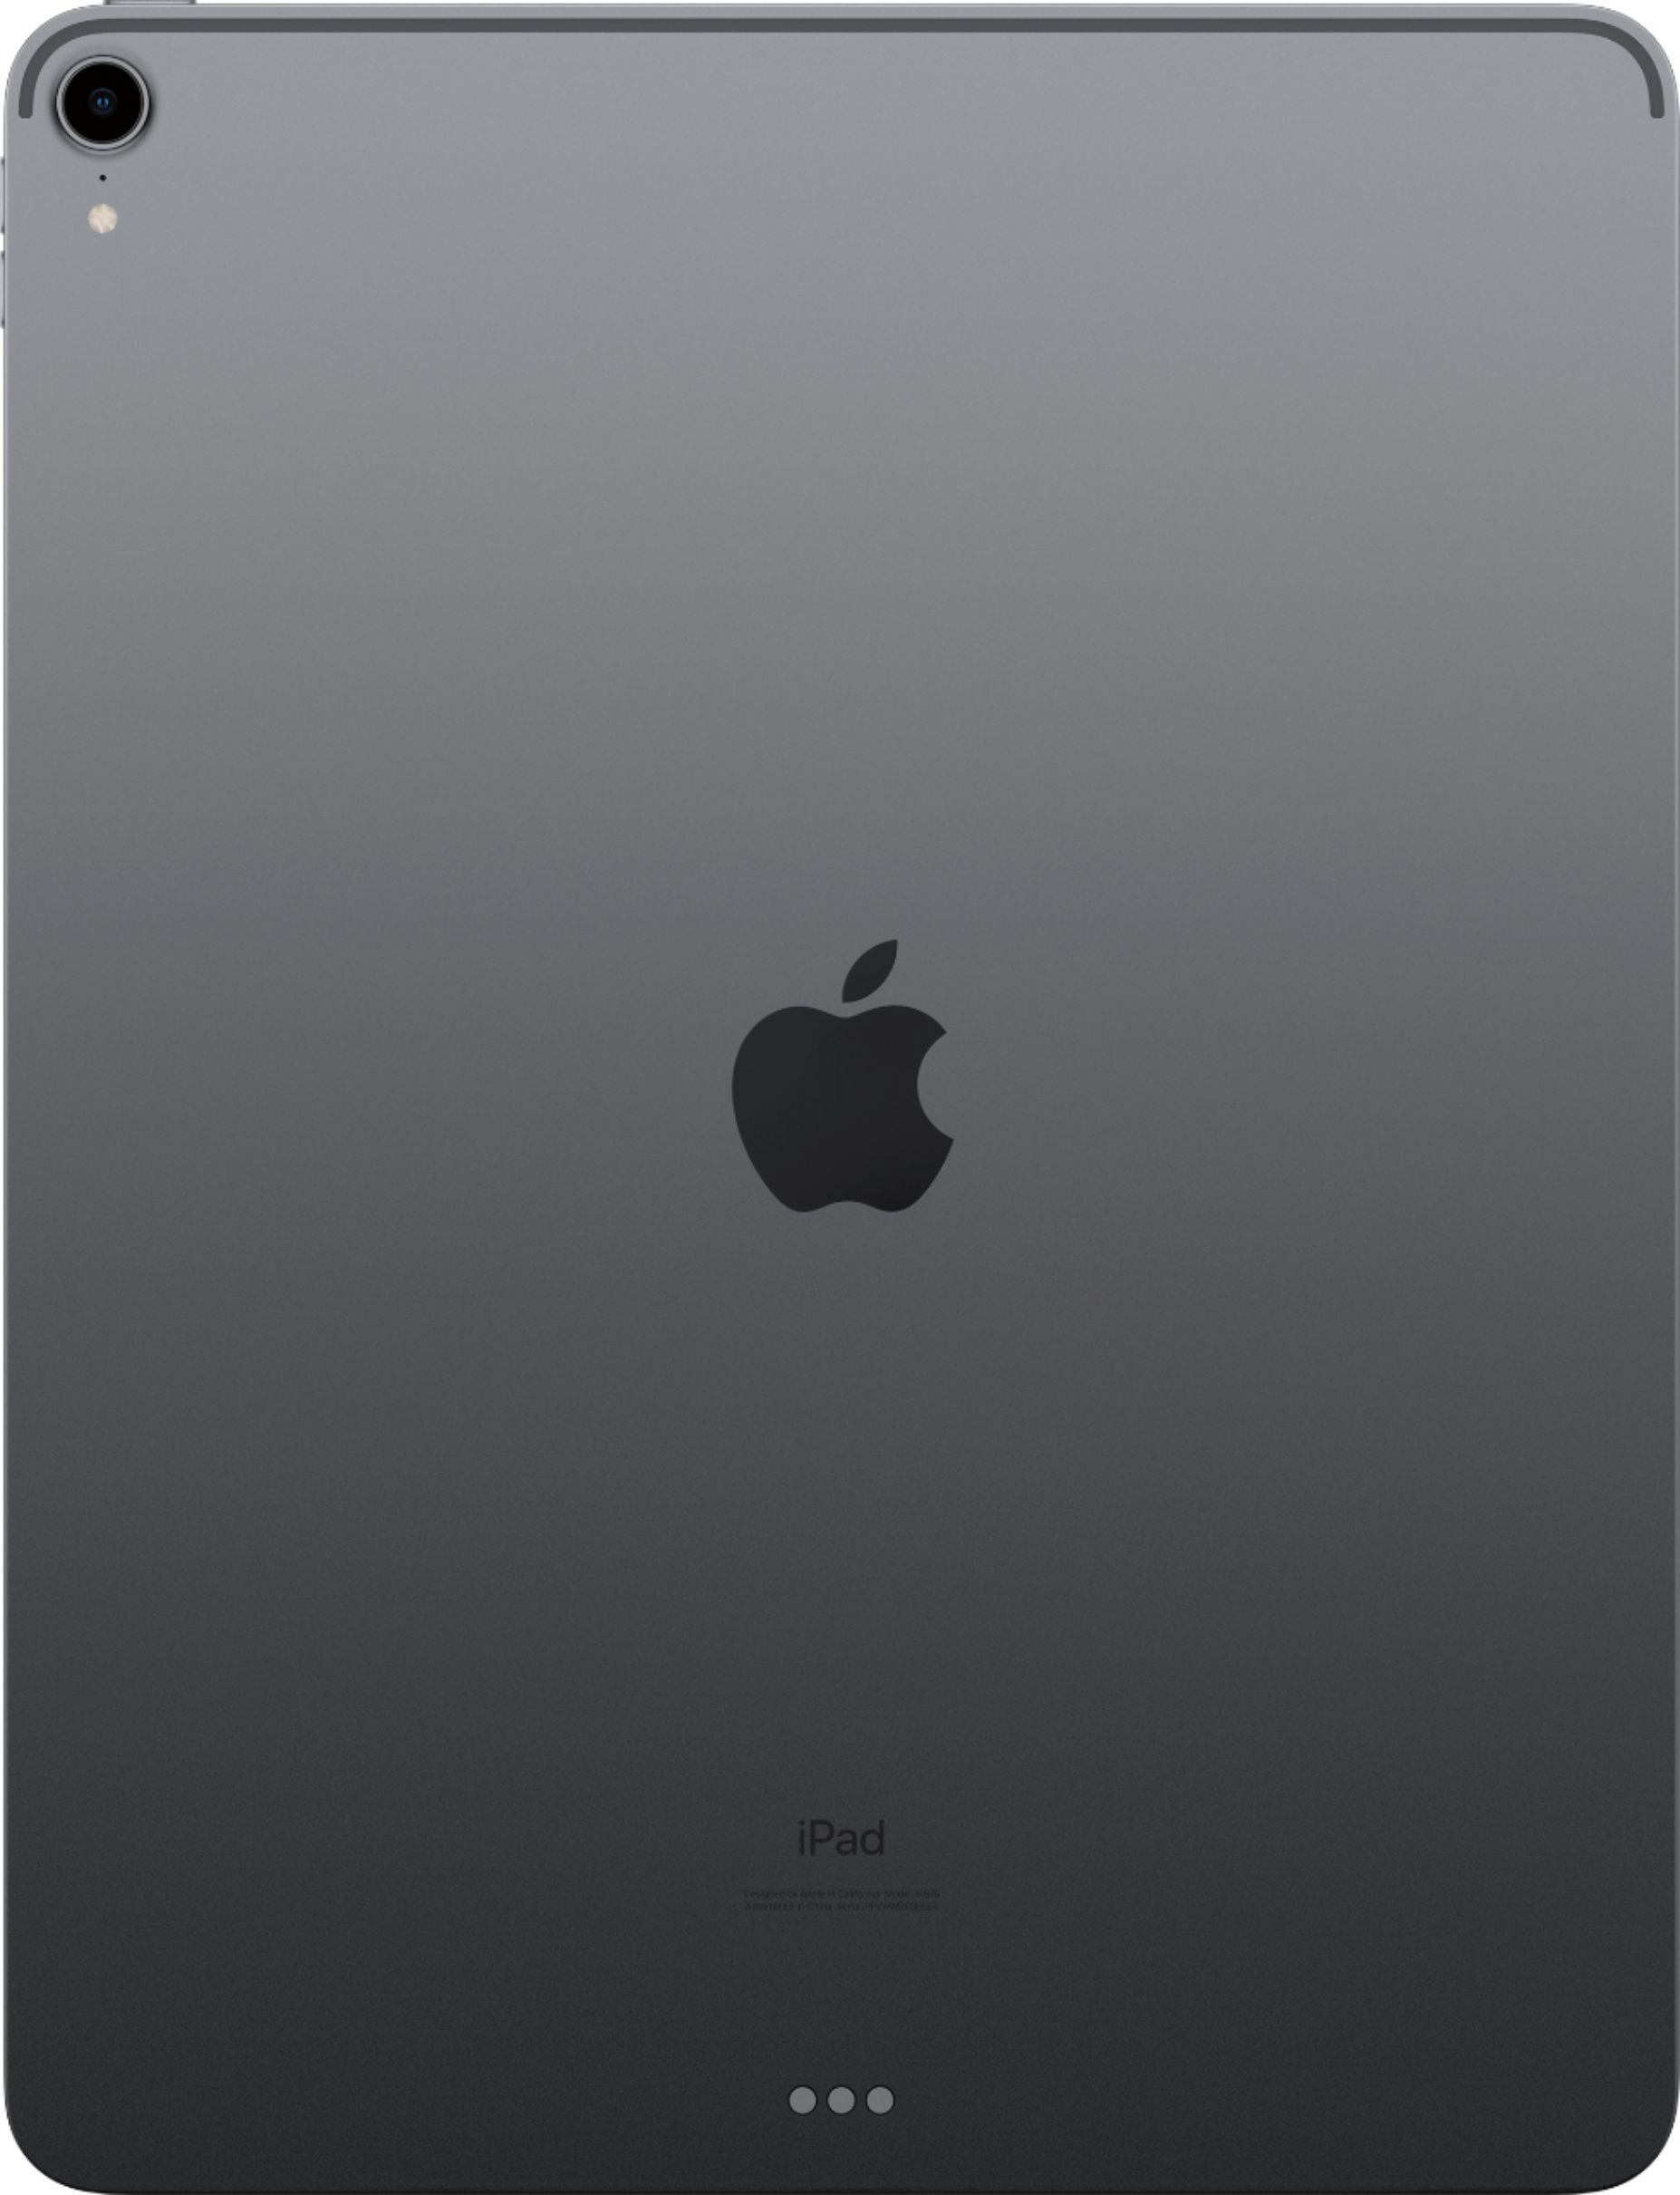 Apple iPad Pro 12.9-inch, 3rd Generation - Wi-Fi, 256GB - Space Gray  (Renewed)